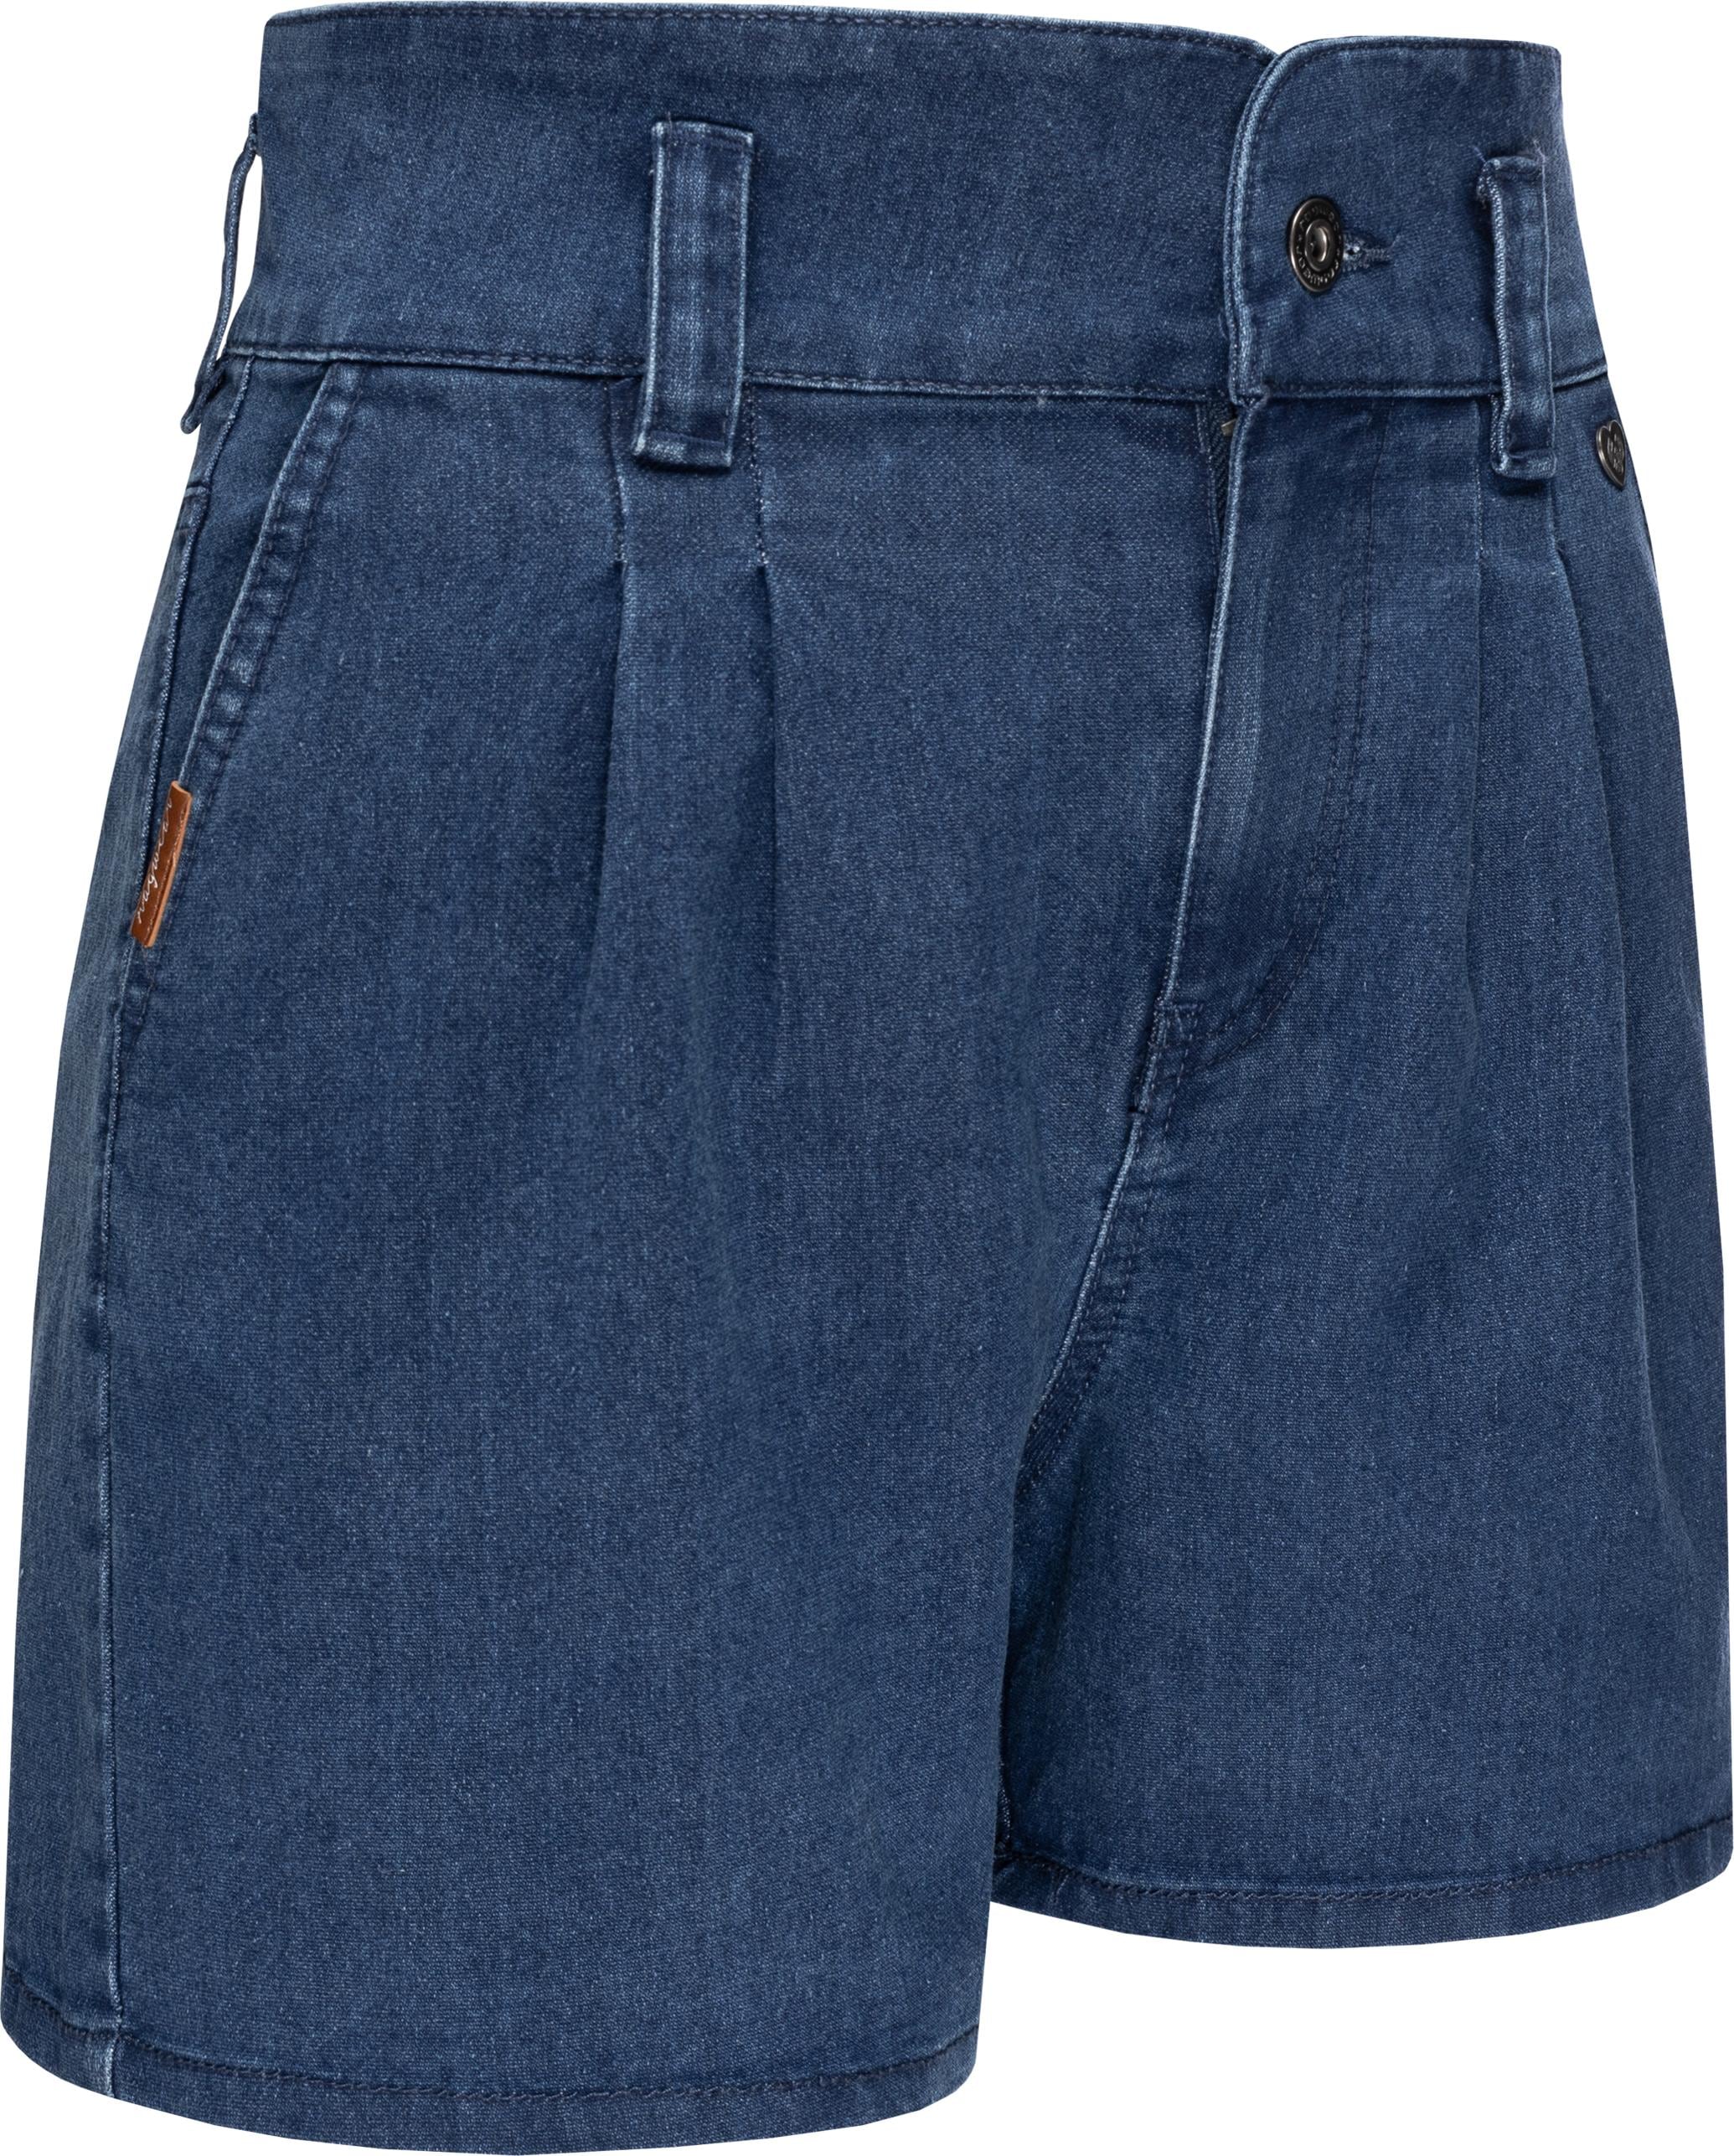 Shorts »Suzzie«, stylische, kurze Sommerhose in Jeansoptik